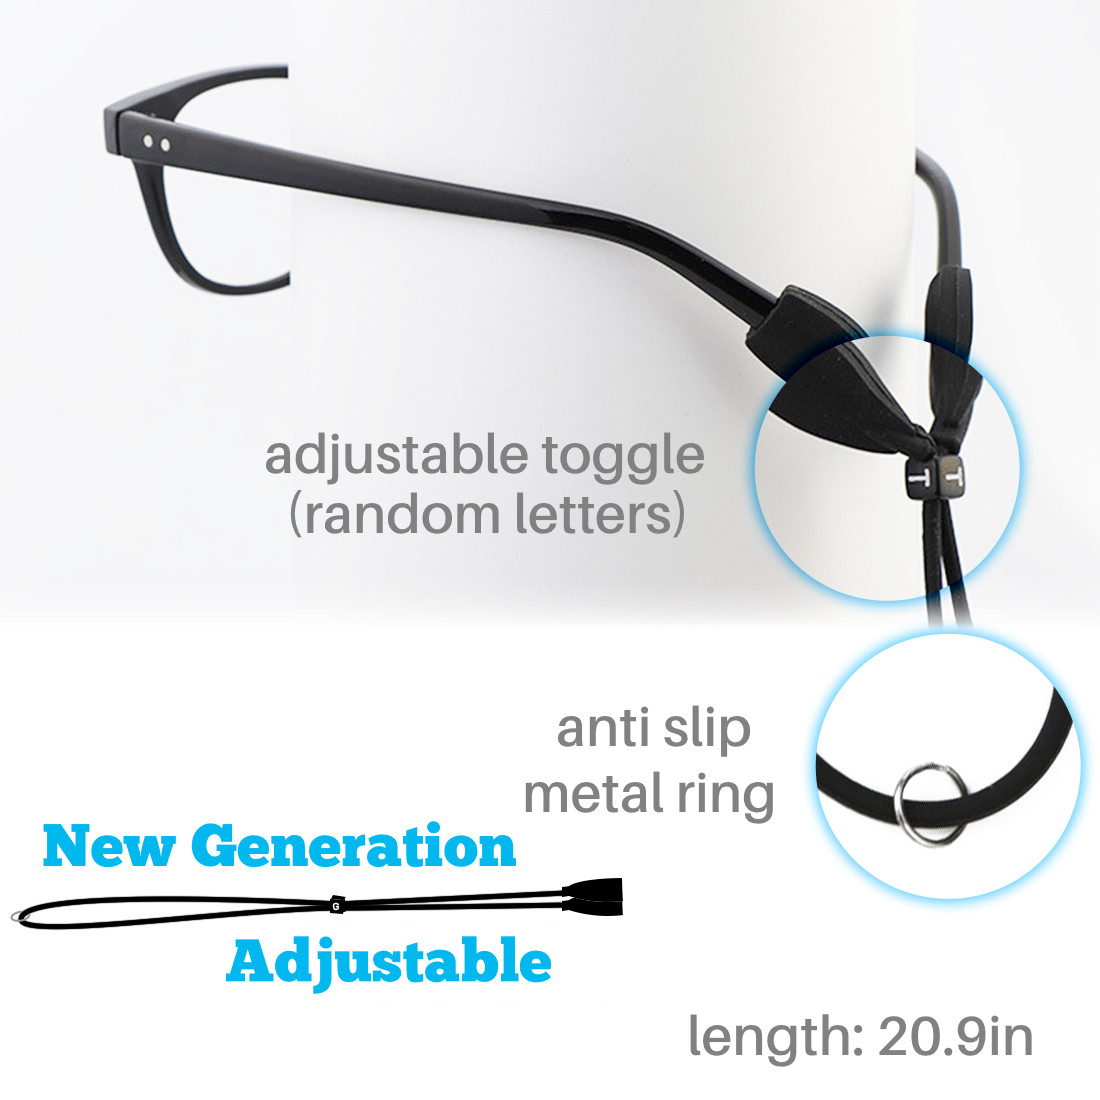 Kalevel Set Of 11 Silicone Eyeglass Ear Grips Hooks Temple Tips Sleeve